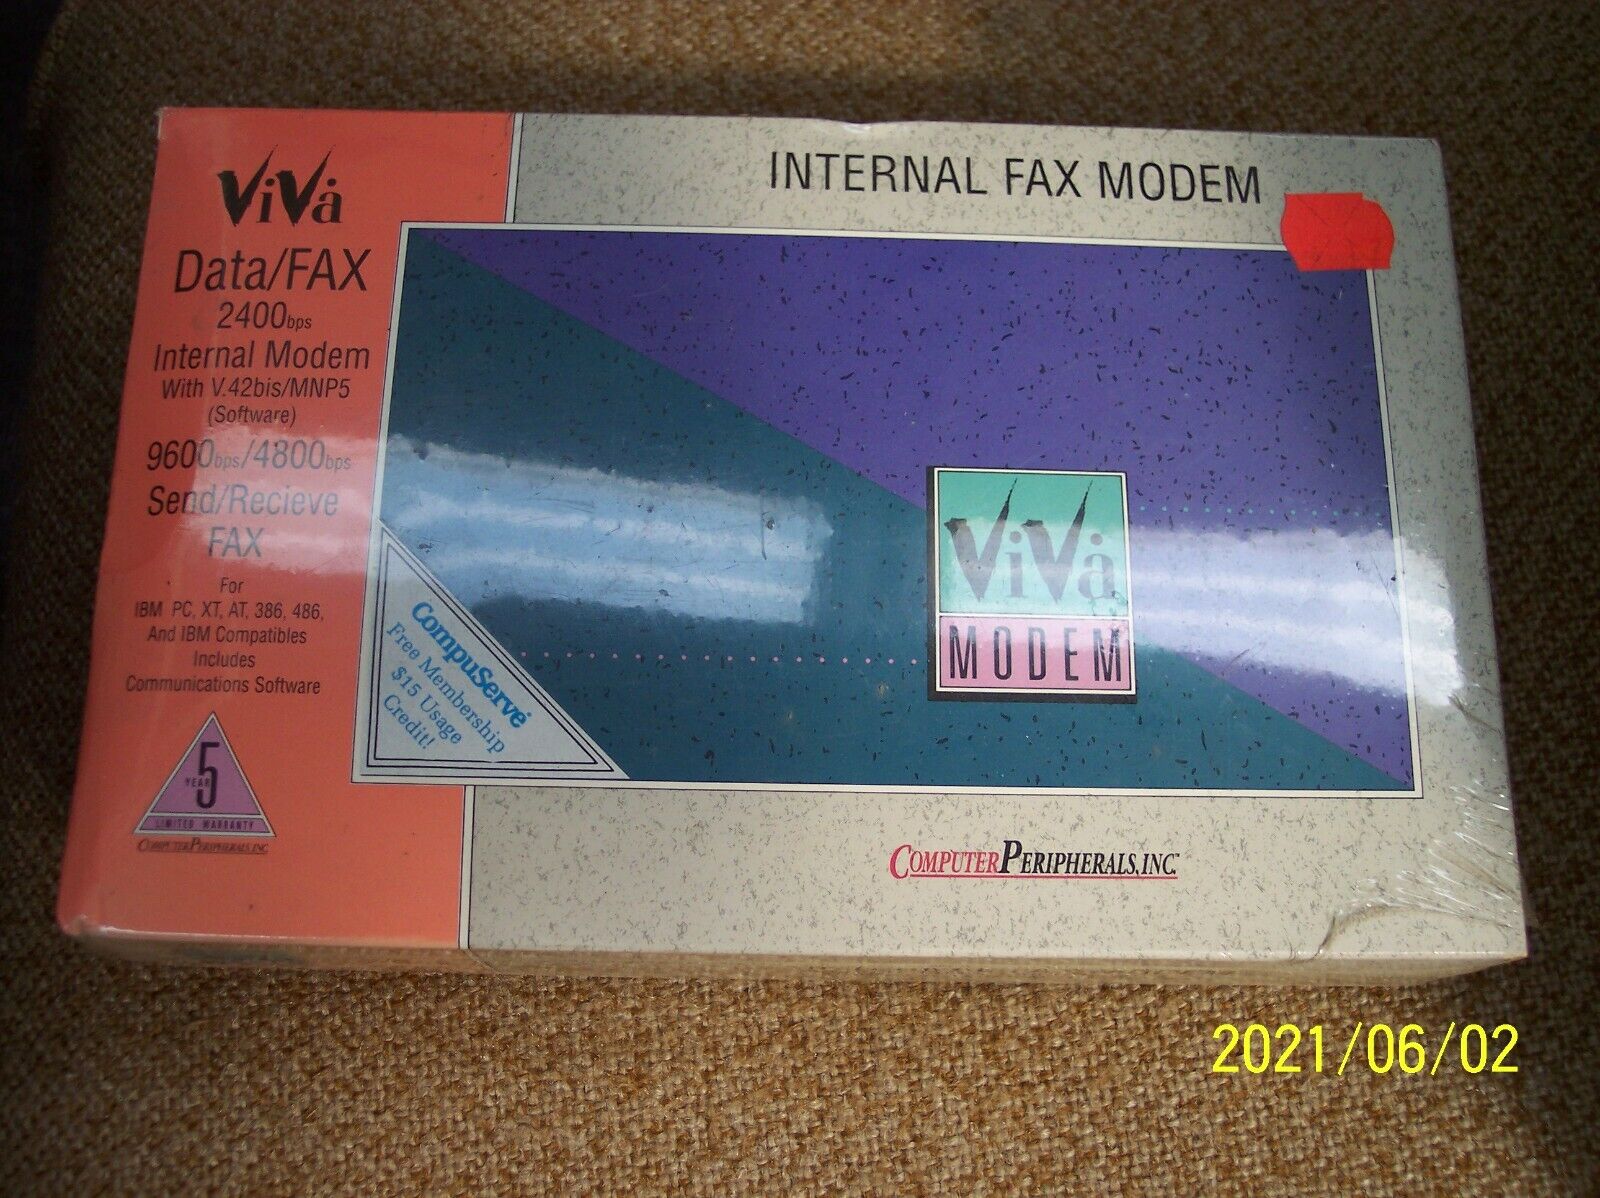 ViVa Internal Fax Modem, 9600/4800 Send/Receive Fax, 2400bps V.24bis/MNP5 S/W